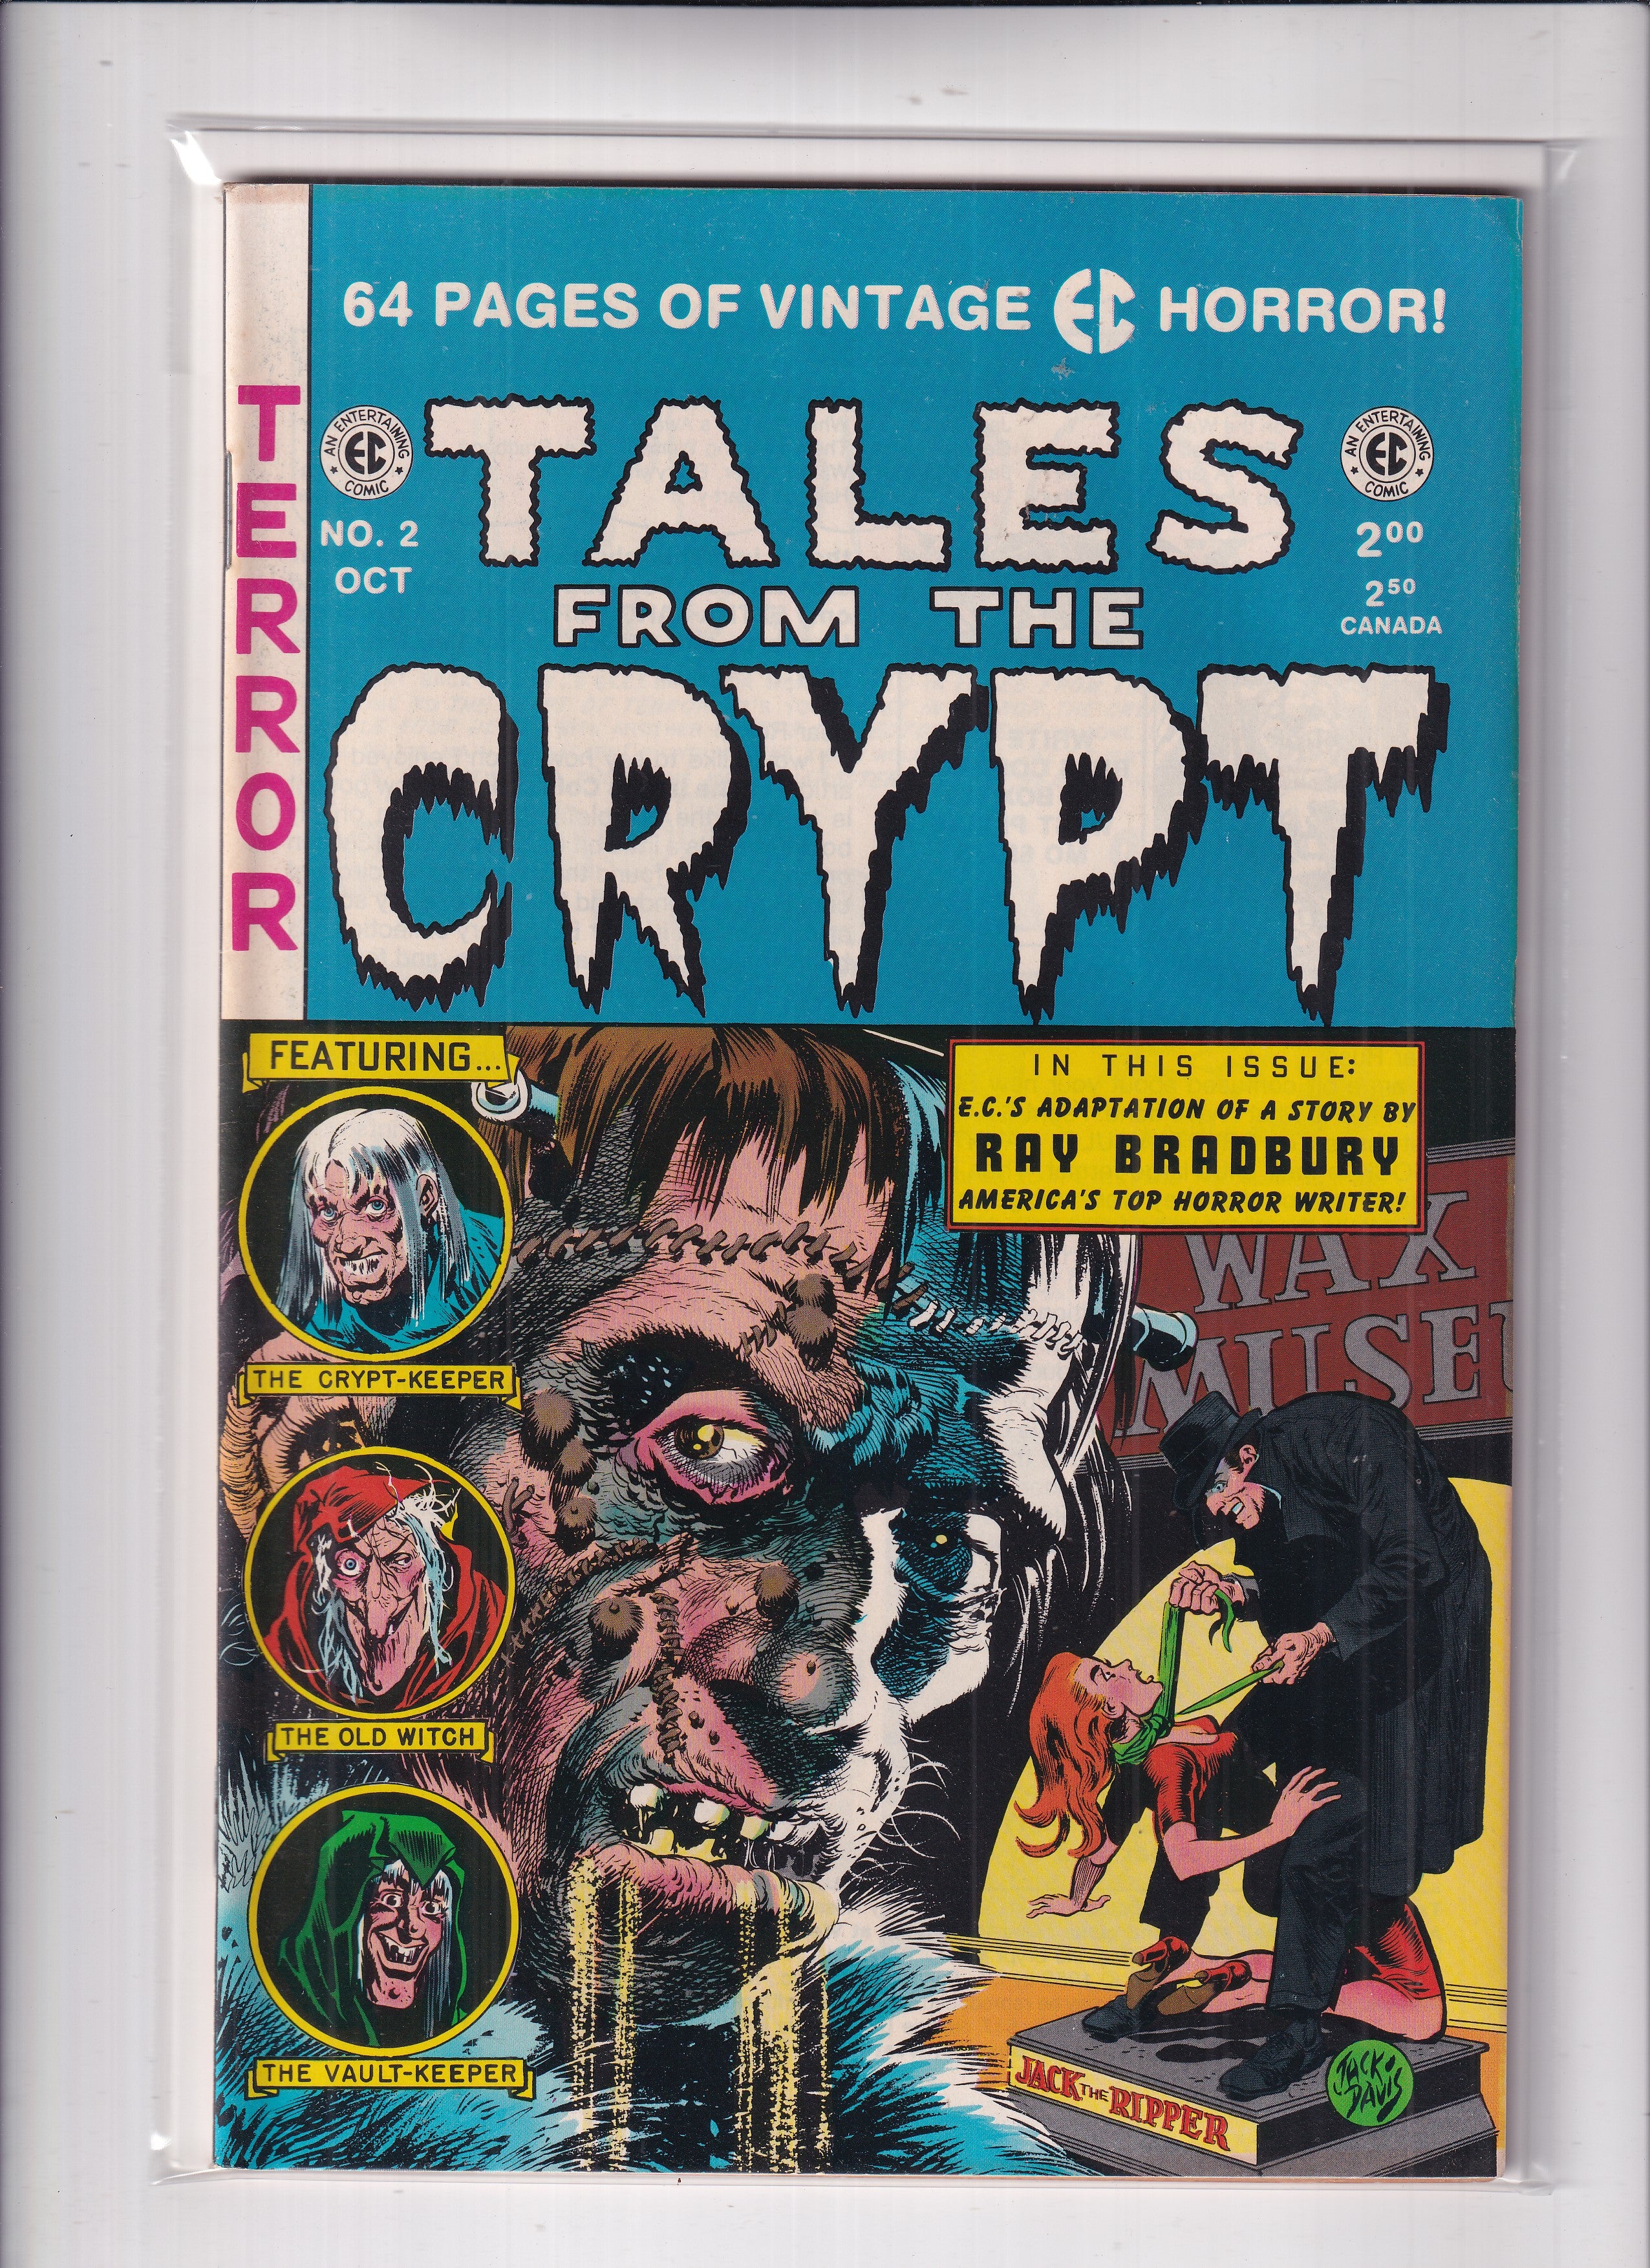 TALES FROM THE CRYPT #2 EC REPRINT - Slab City Comics 